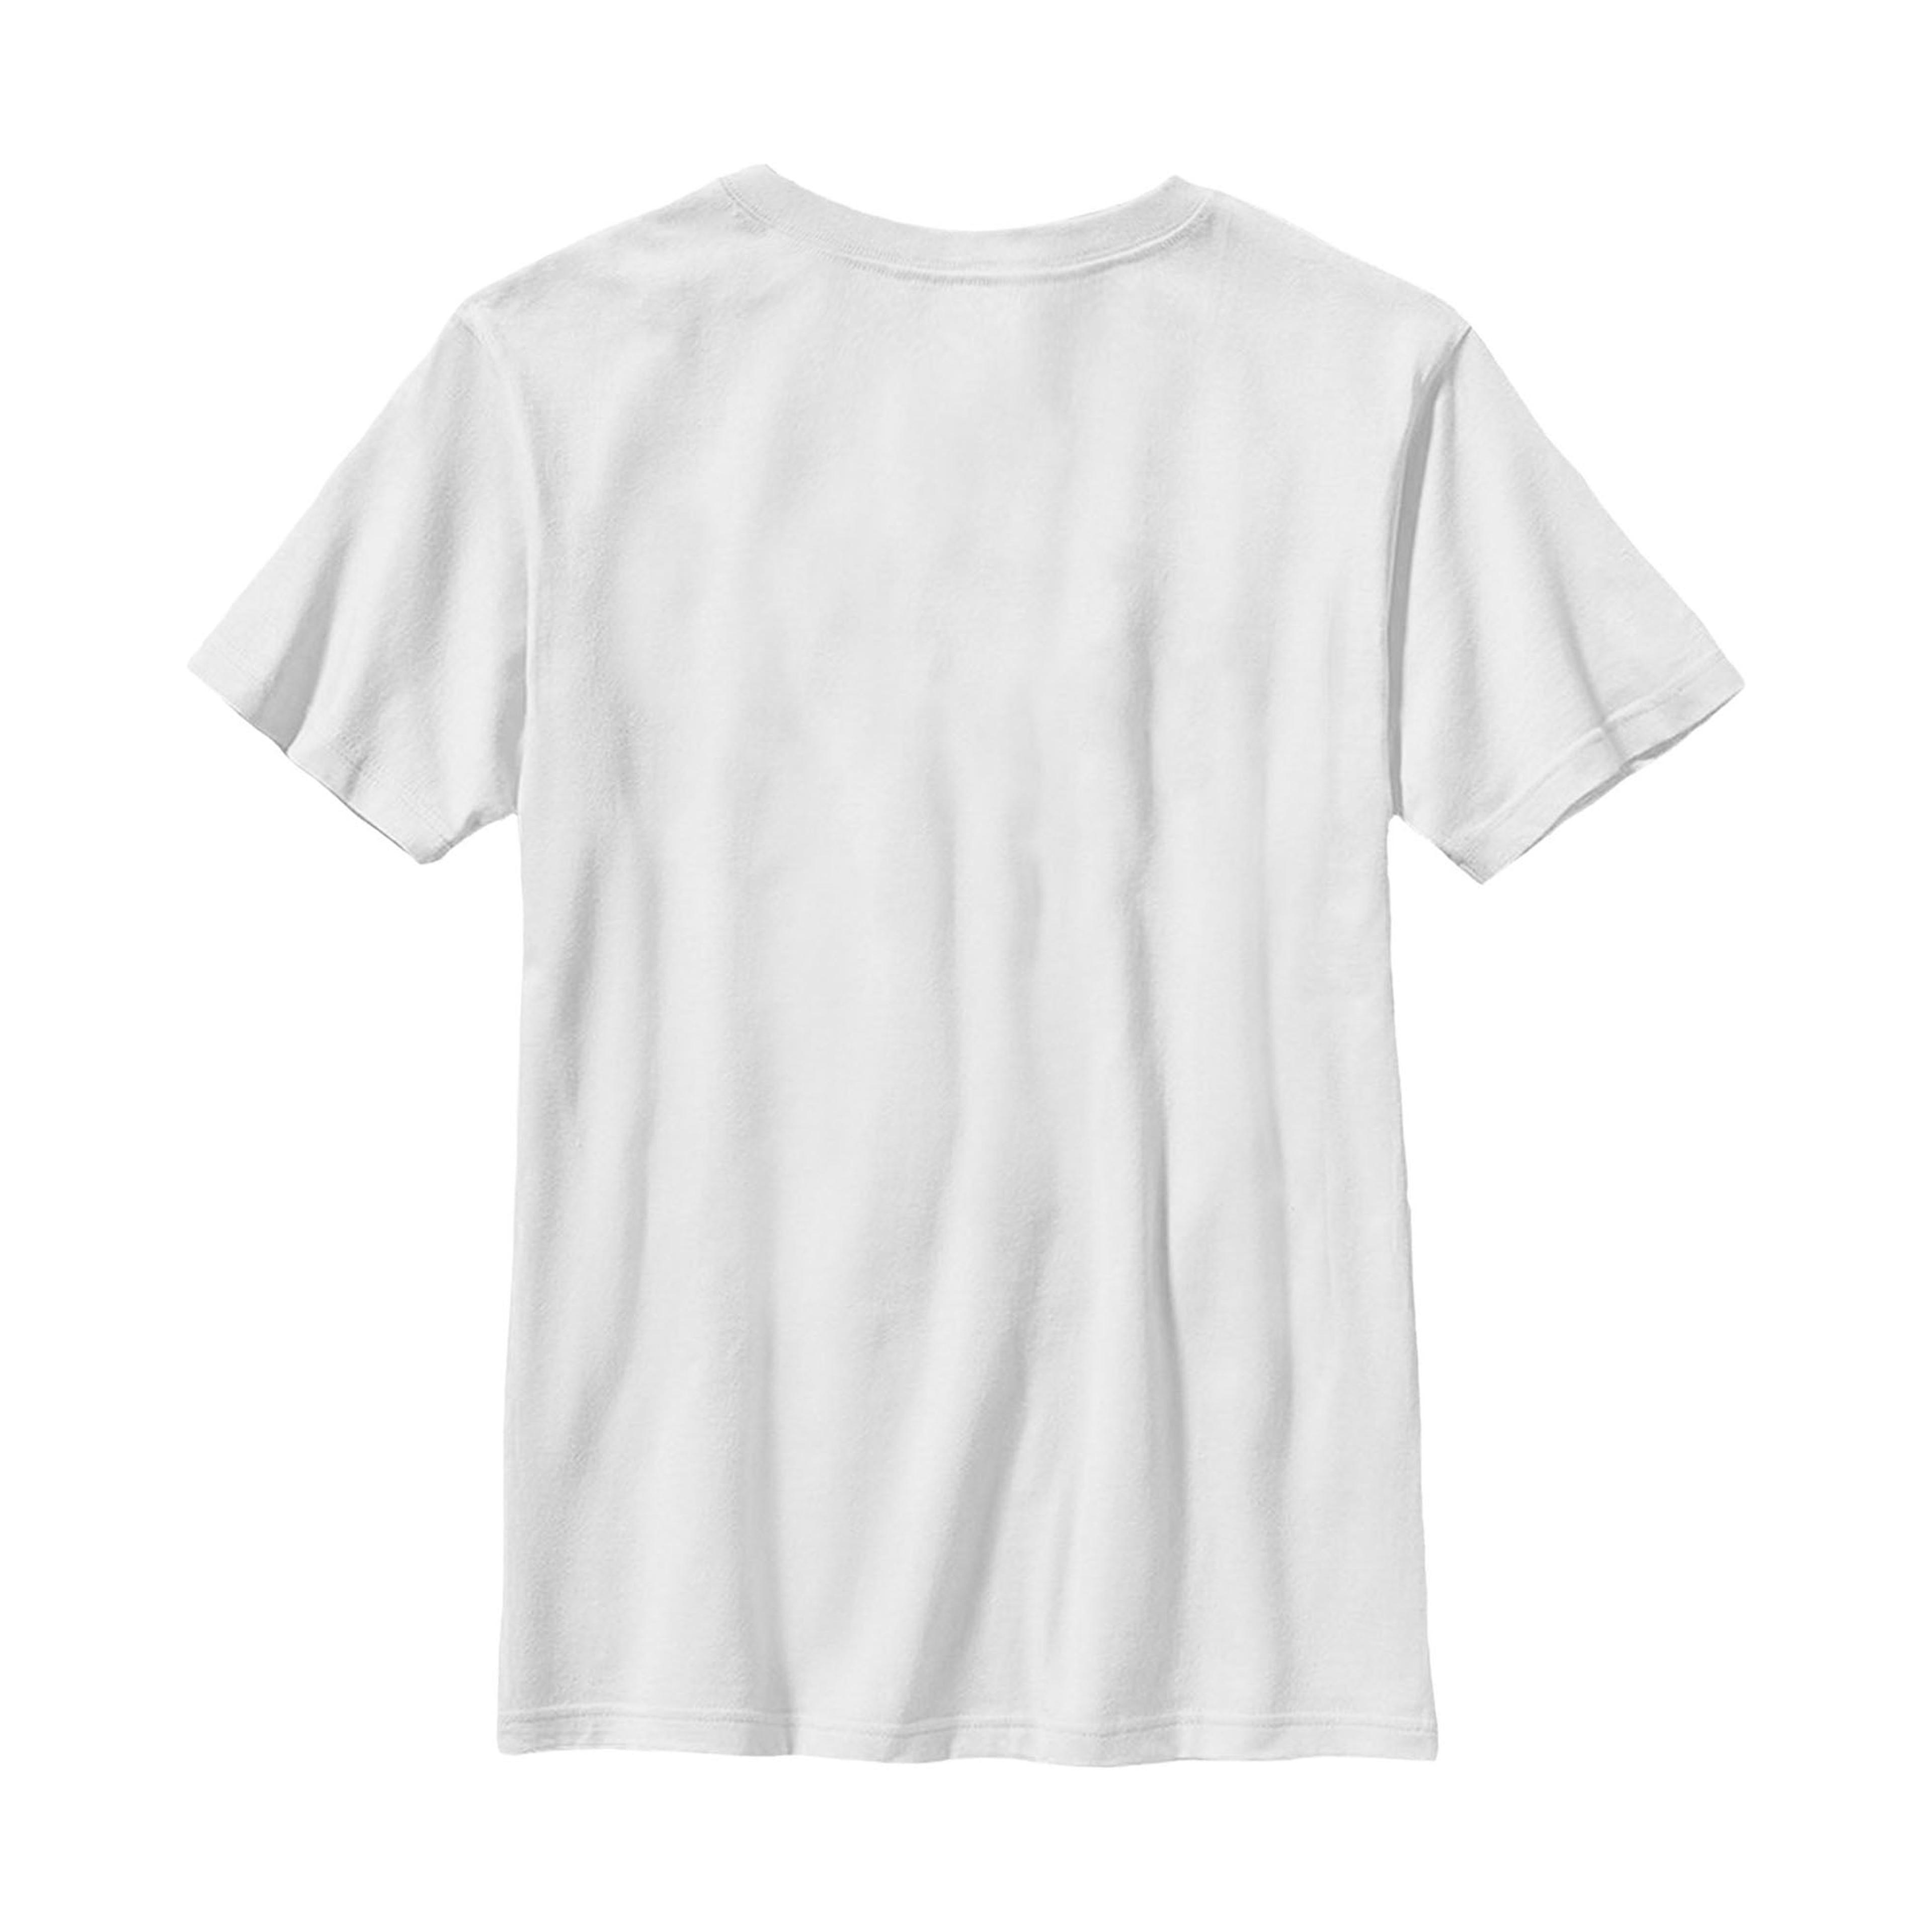 Alternate View 2 of Boy's Ghostbusters Framed Slimer T-Shirt